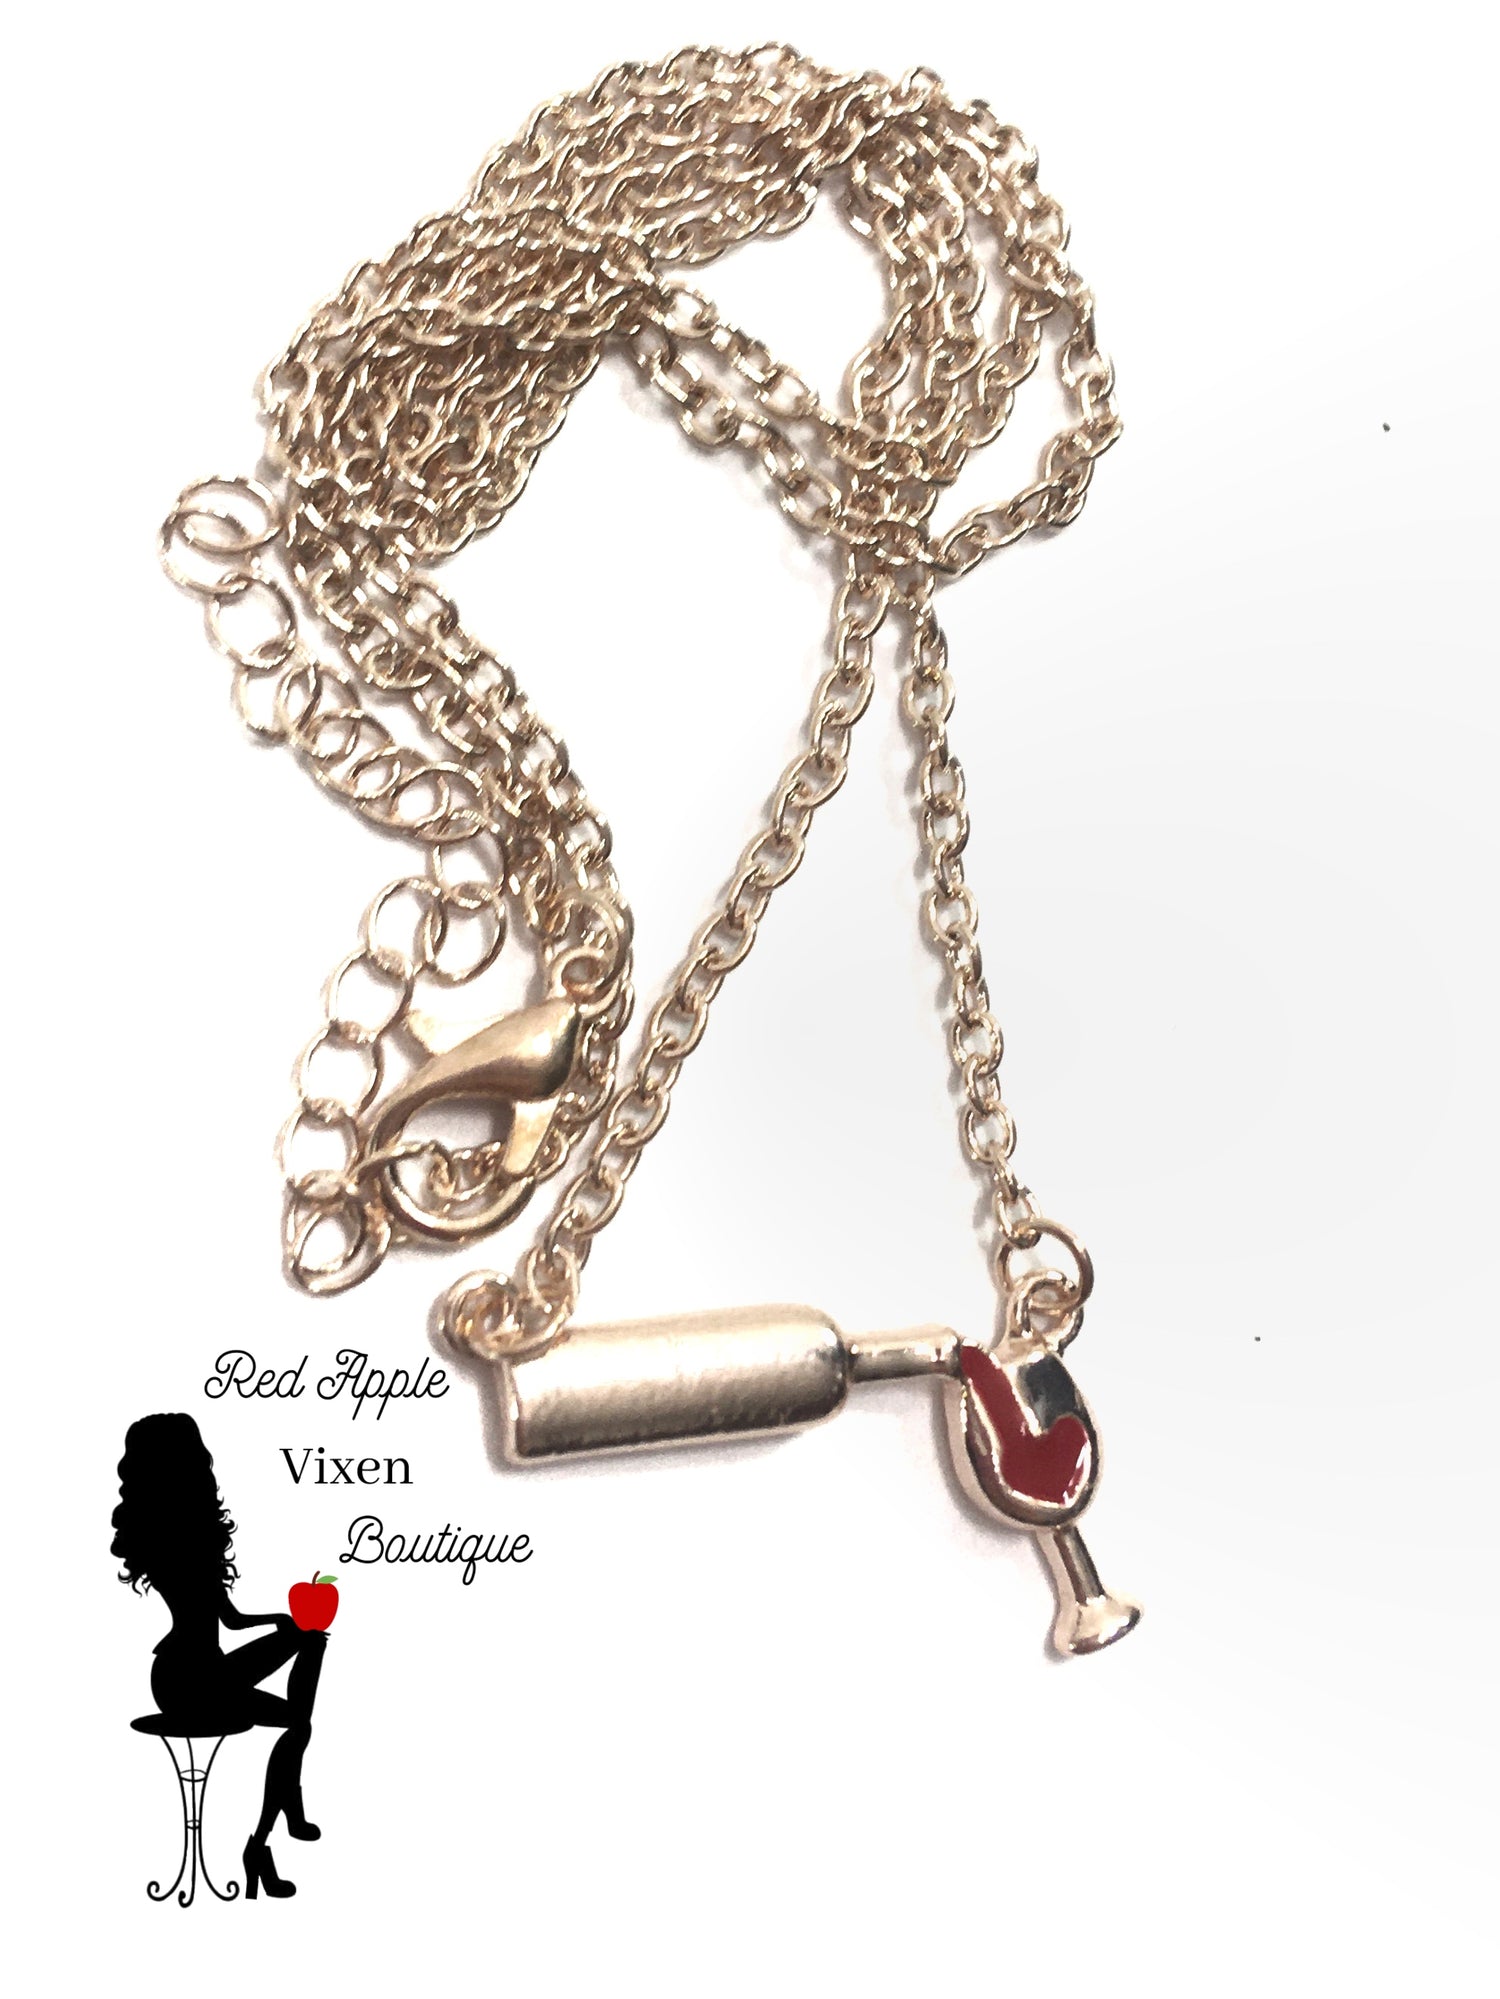 Rose Gold Bottle and Glass Pendant Necklace - Red Apple Vixen Boutique